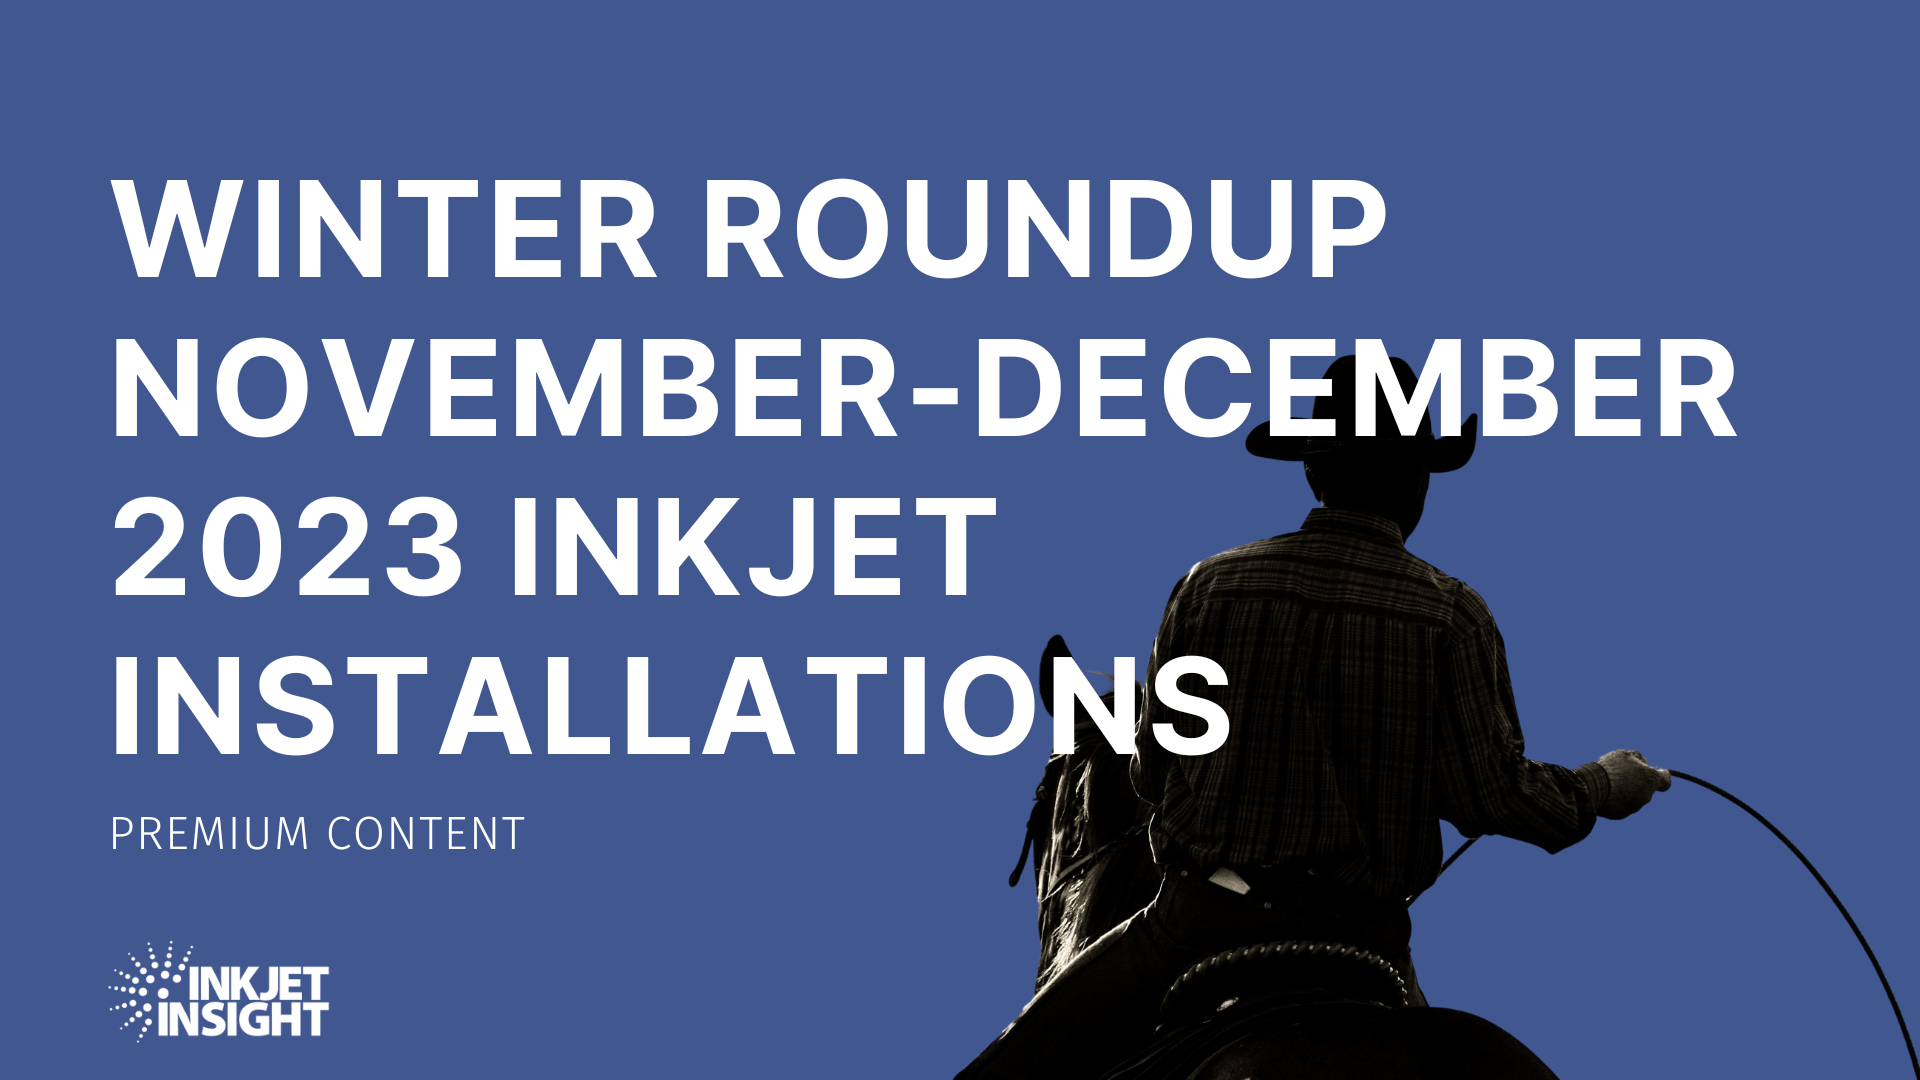 Featured image for “Winter Roundup – November-December 2023 Inkjet Installations”